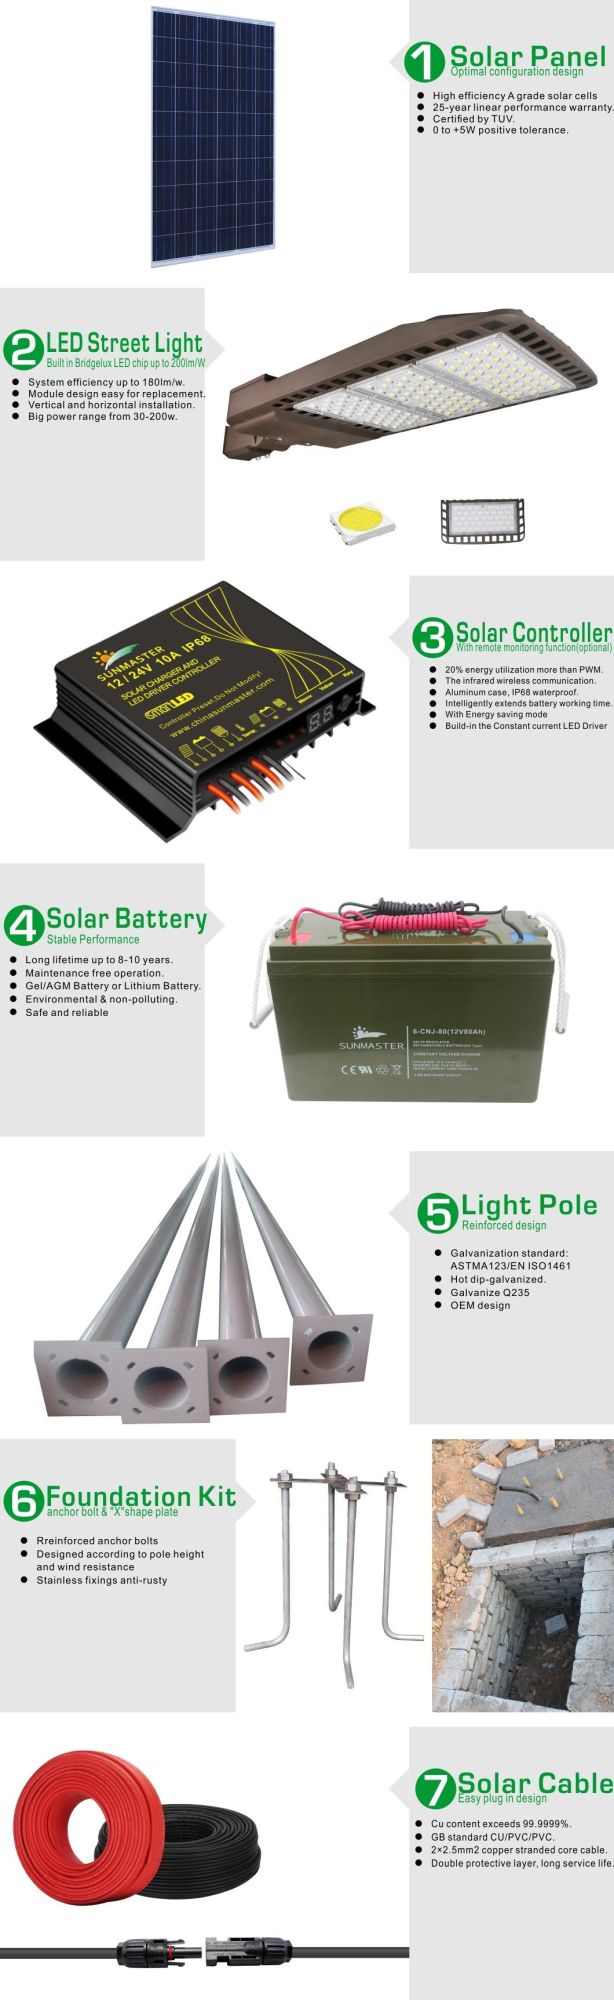 24V High Quality Aluminum Alloy Arabic Shoebox Component Wireless 1000W LED Light//